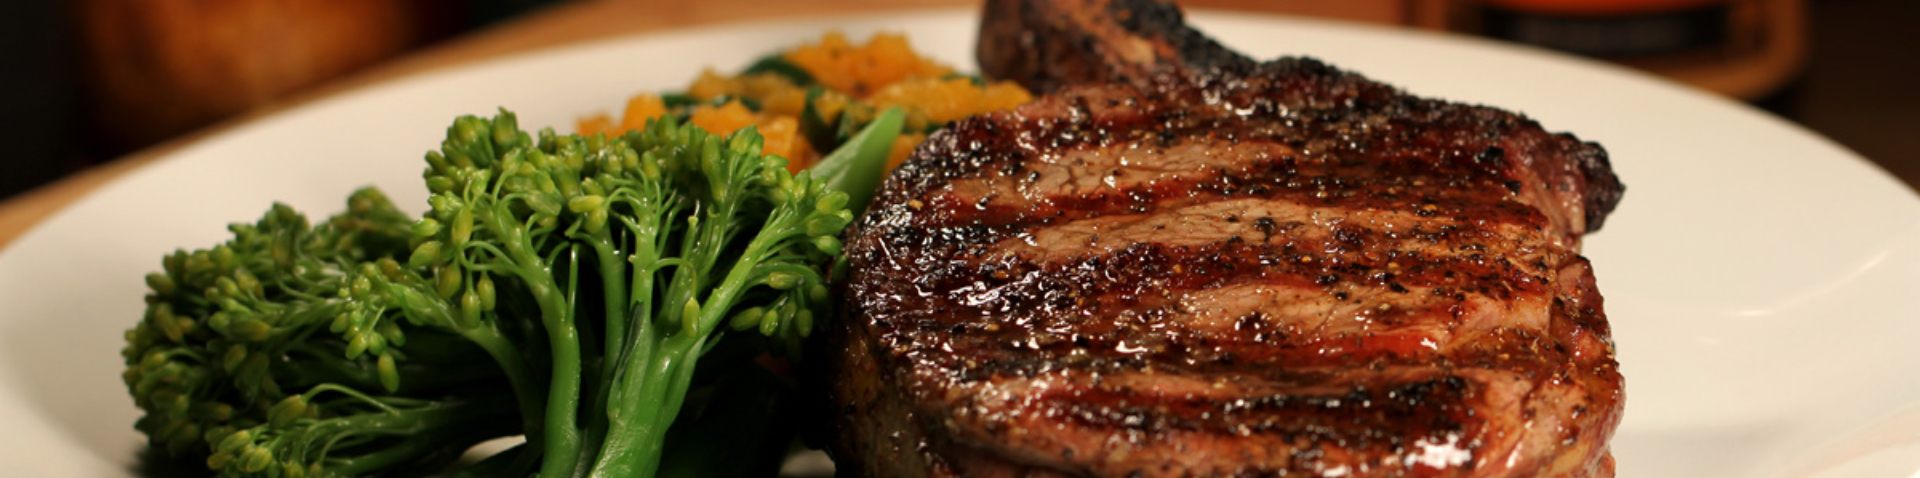 Steak and broccoli 